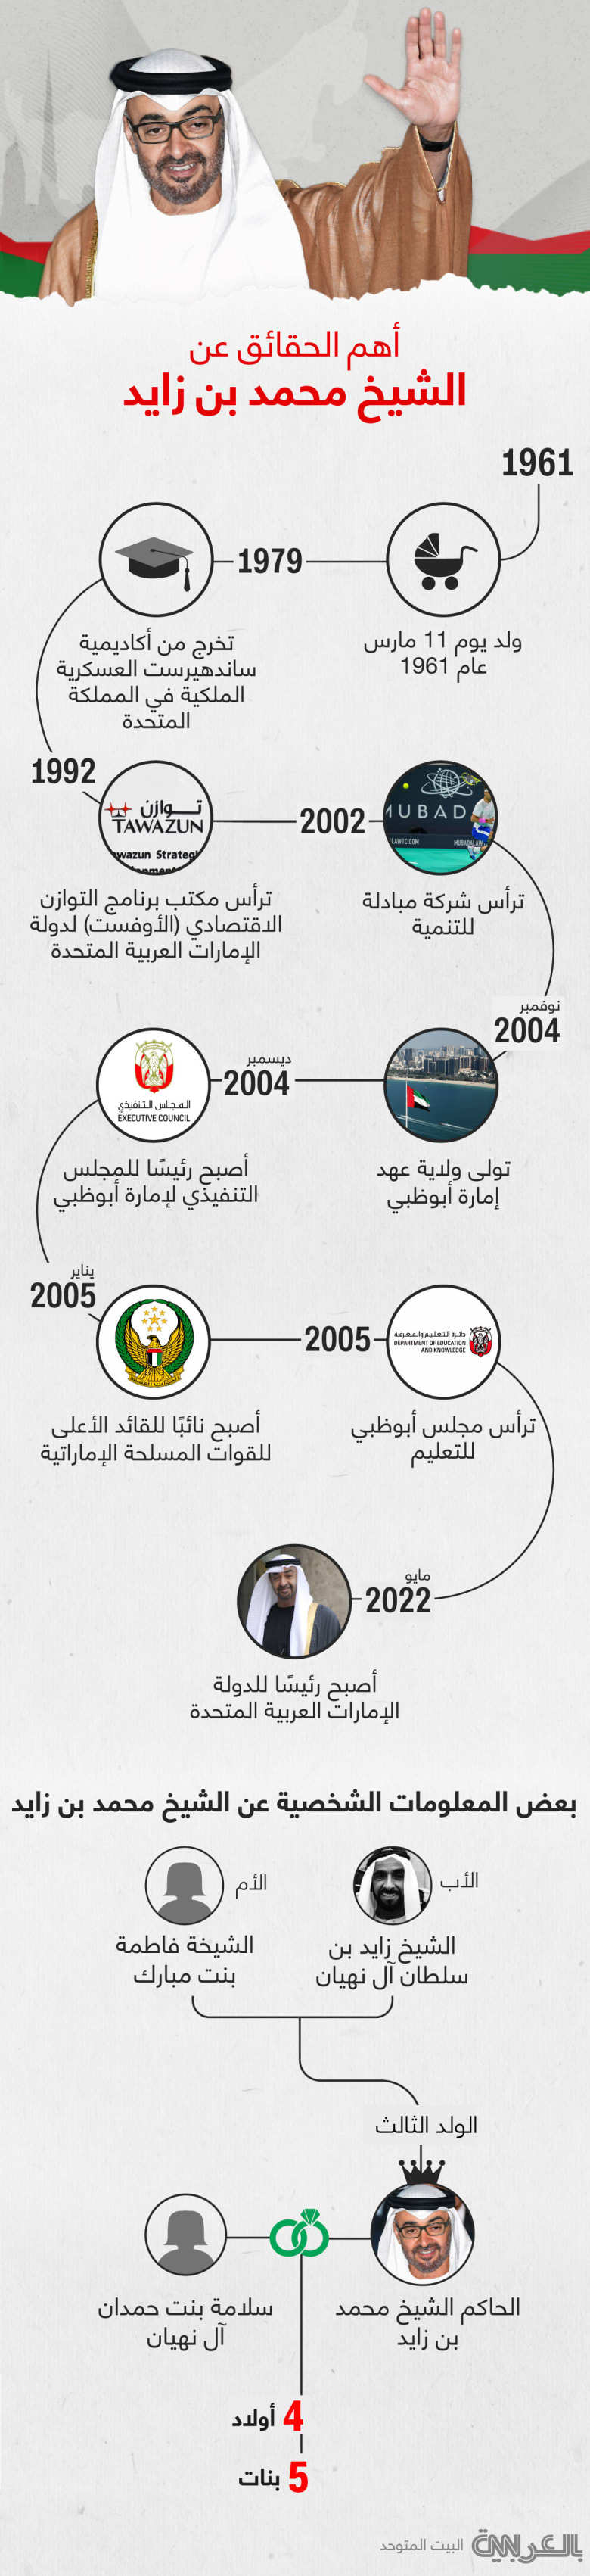 Mohamad-bin-zayed-BIO